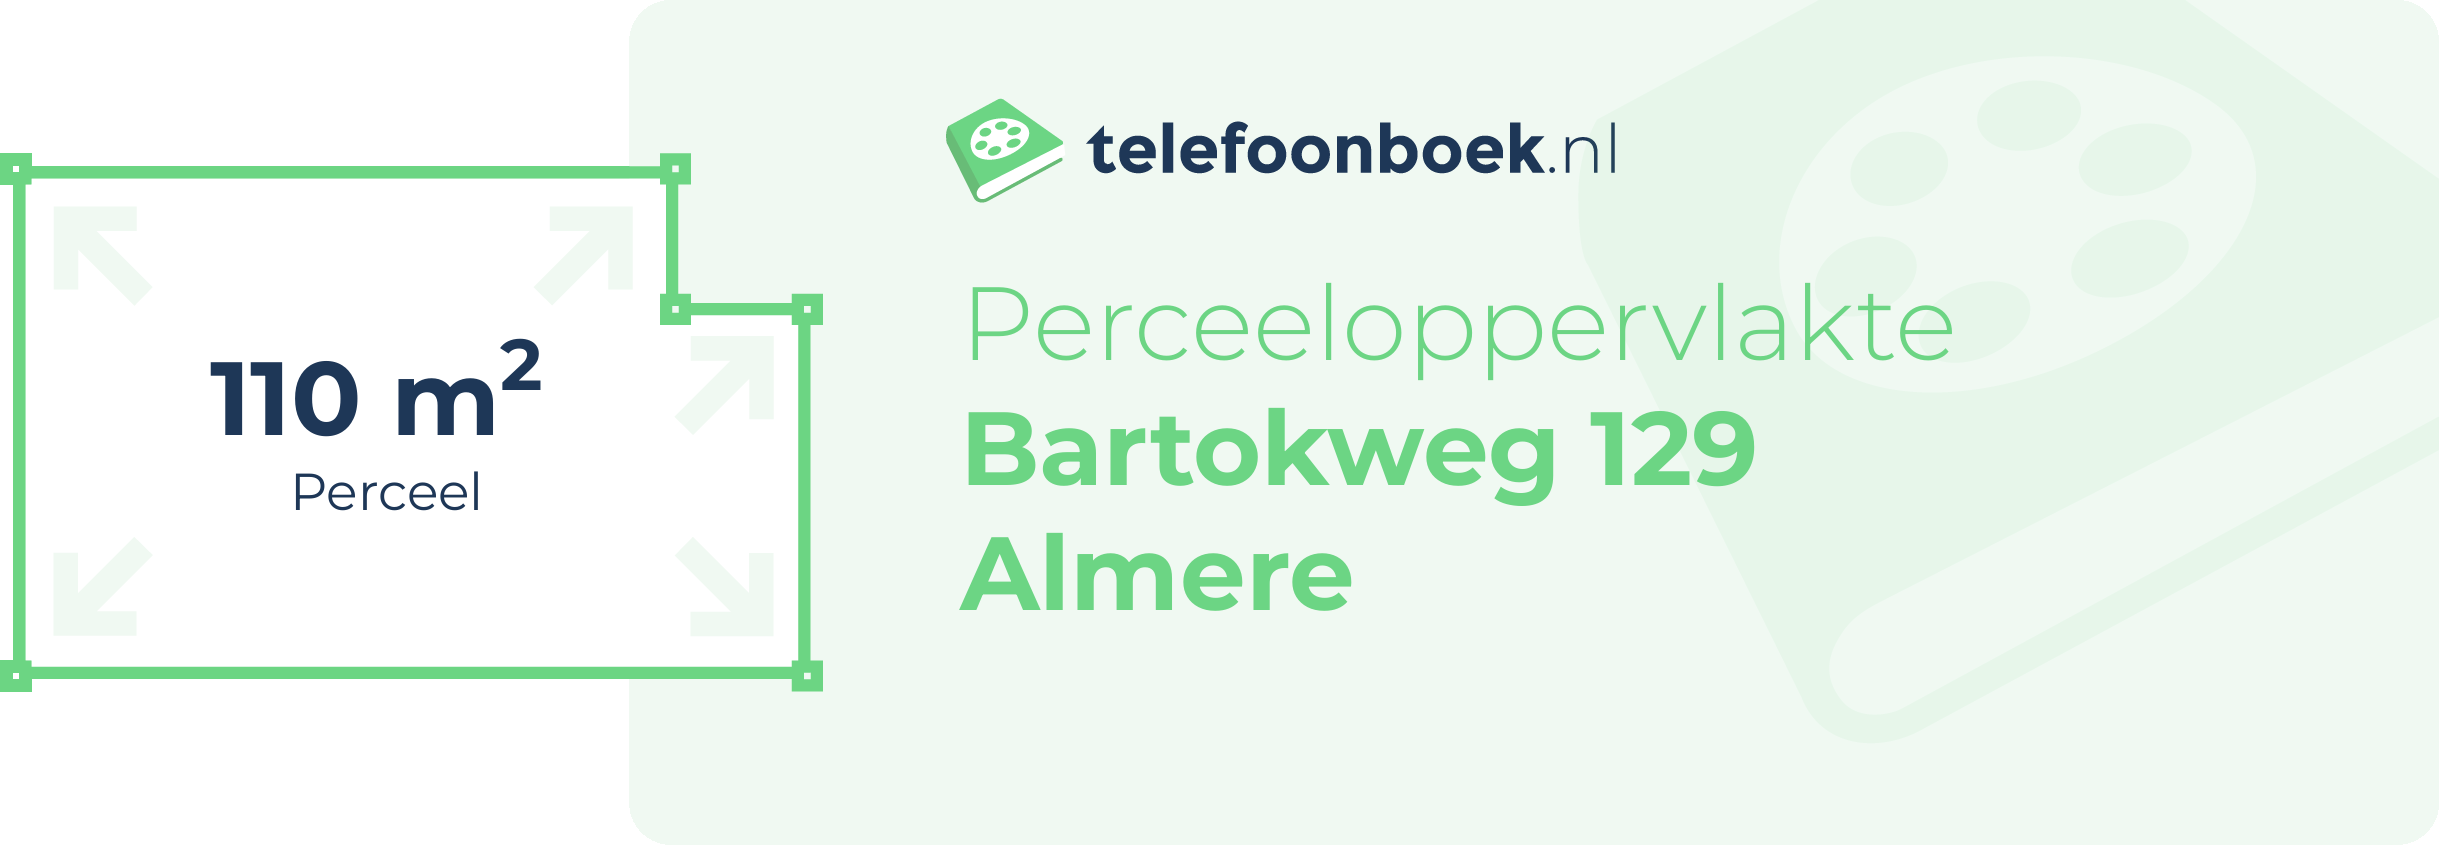 Perceeloppervlakte Bartokweg 129 Almere